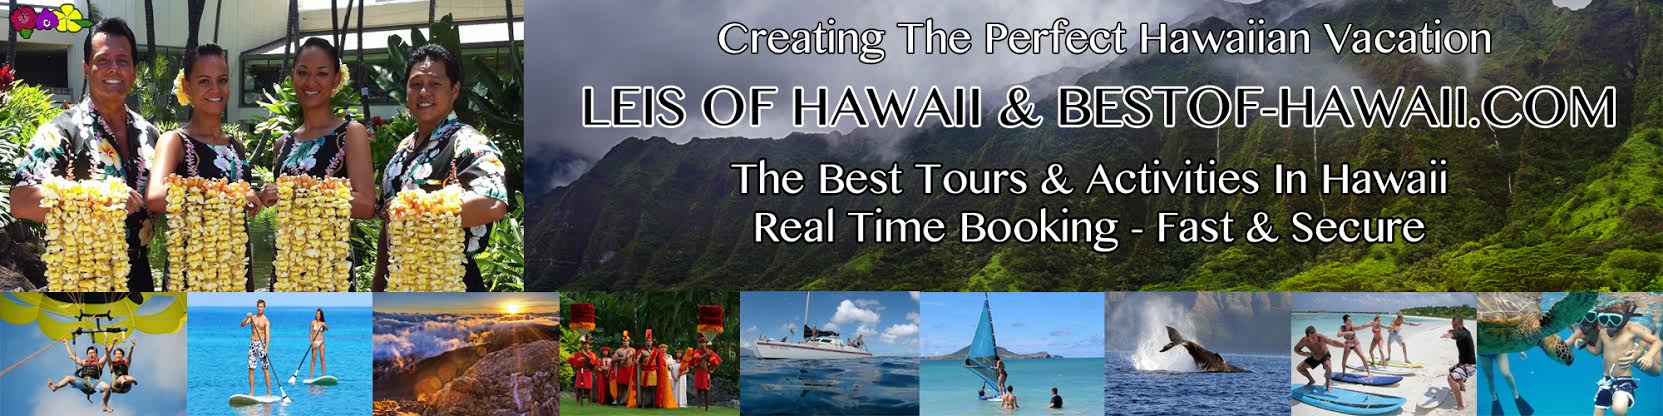 Leis Of Hawaii & Best Of Hawaii